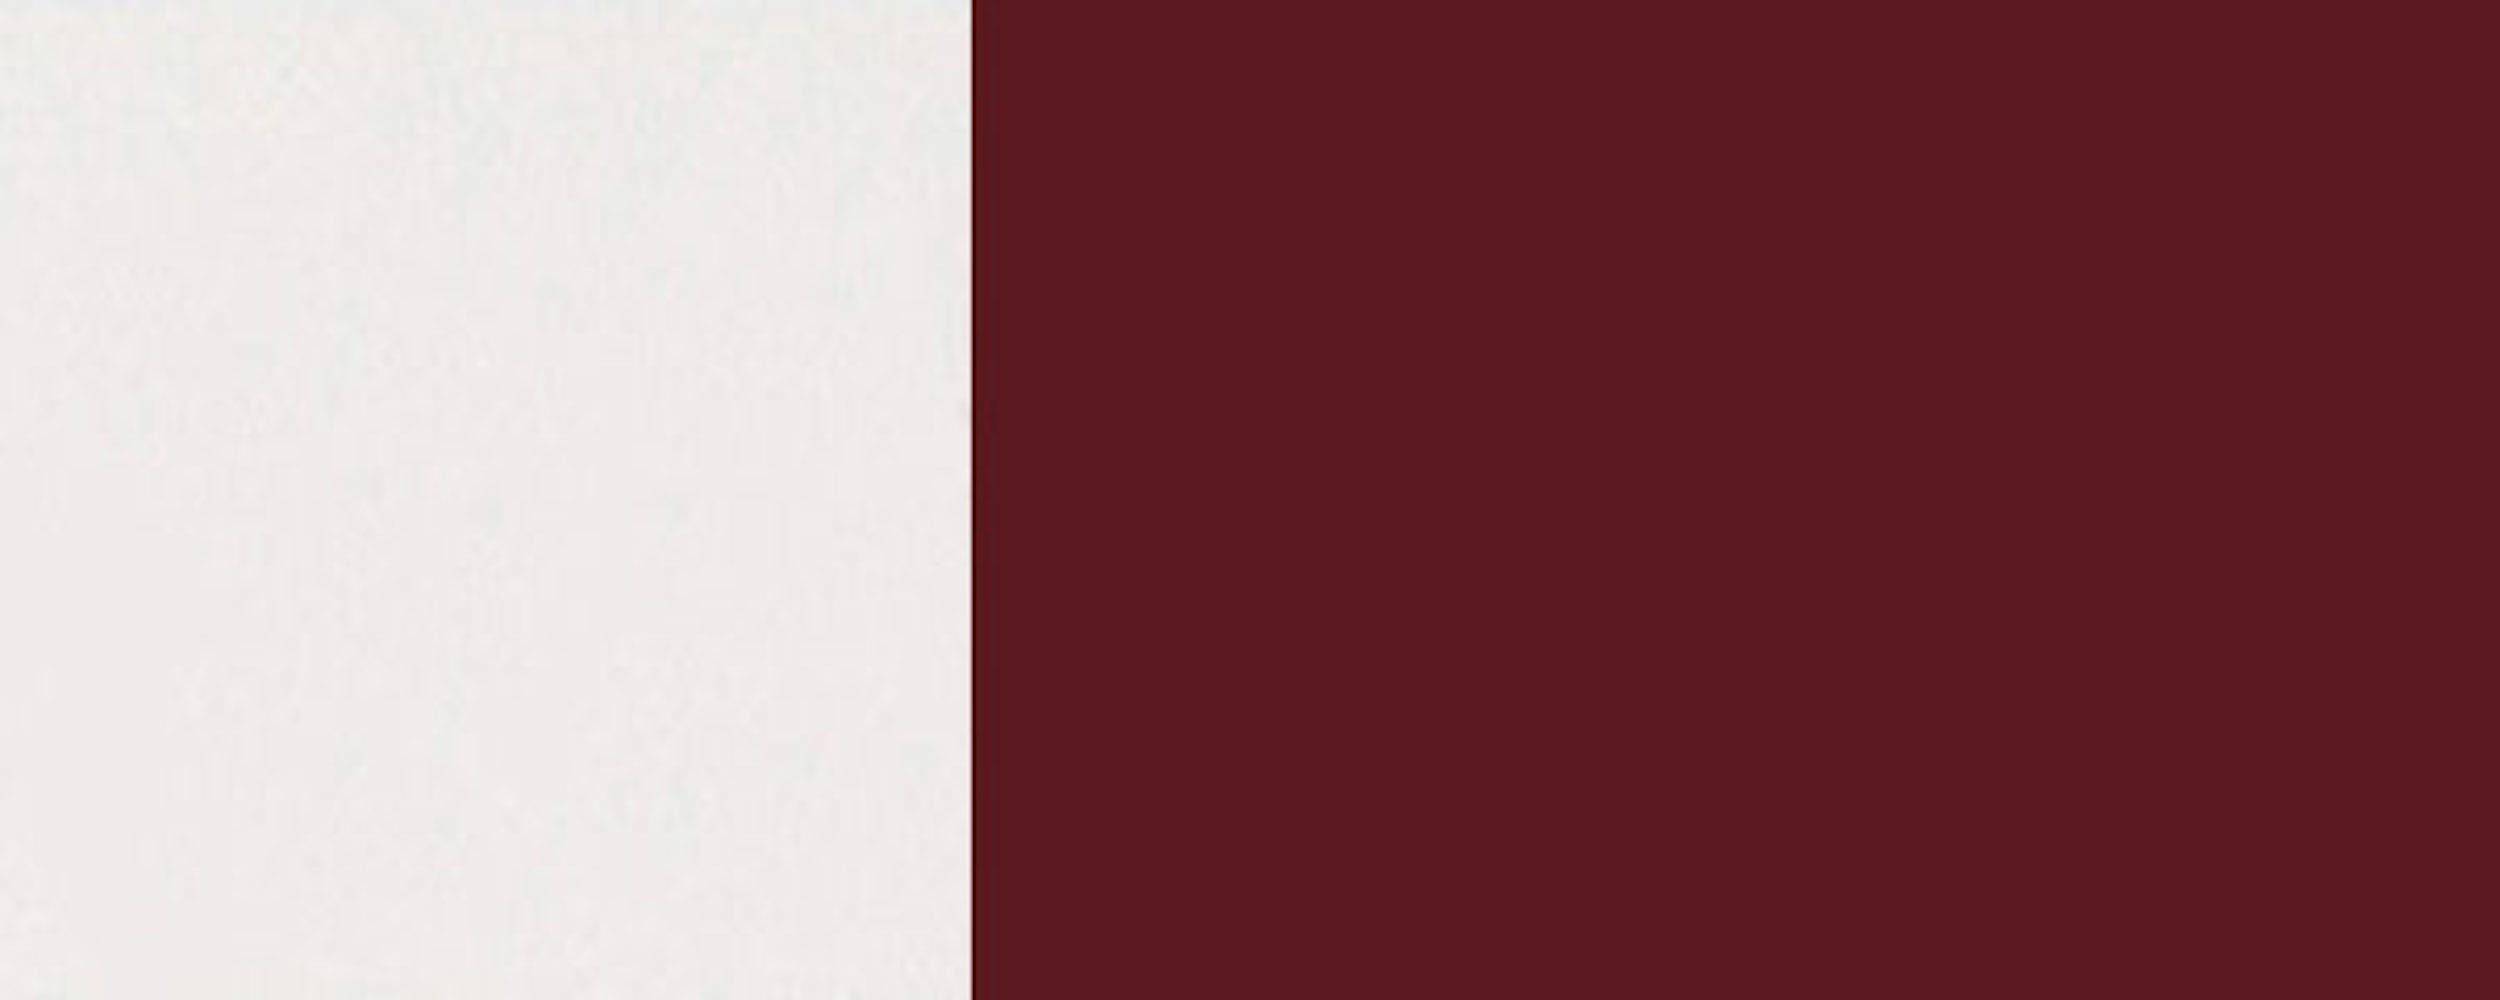 45cm Sockelblende Sockelfarbe wählbar Front- 3005 matt und weinrot Tivoli, Feldmann-Wohnen vollintegriert RAL